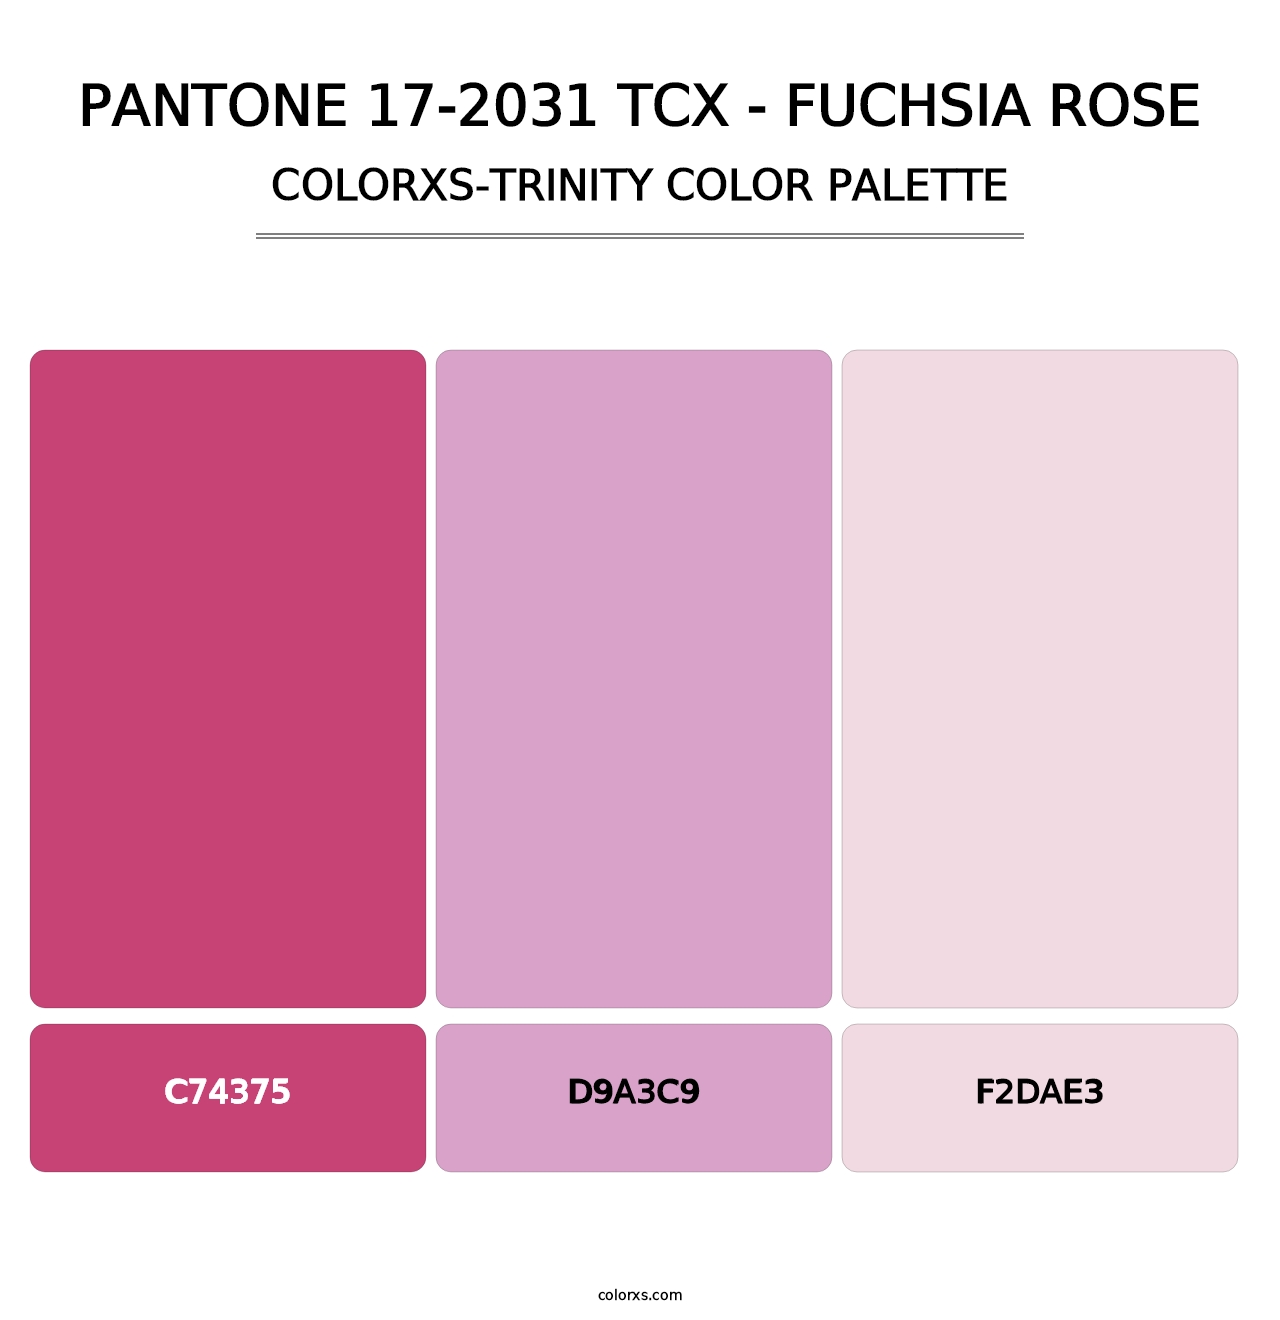 PANTONE 17-2031 TCX - Fuchsia Rose - Colorxs Trinity Palette